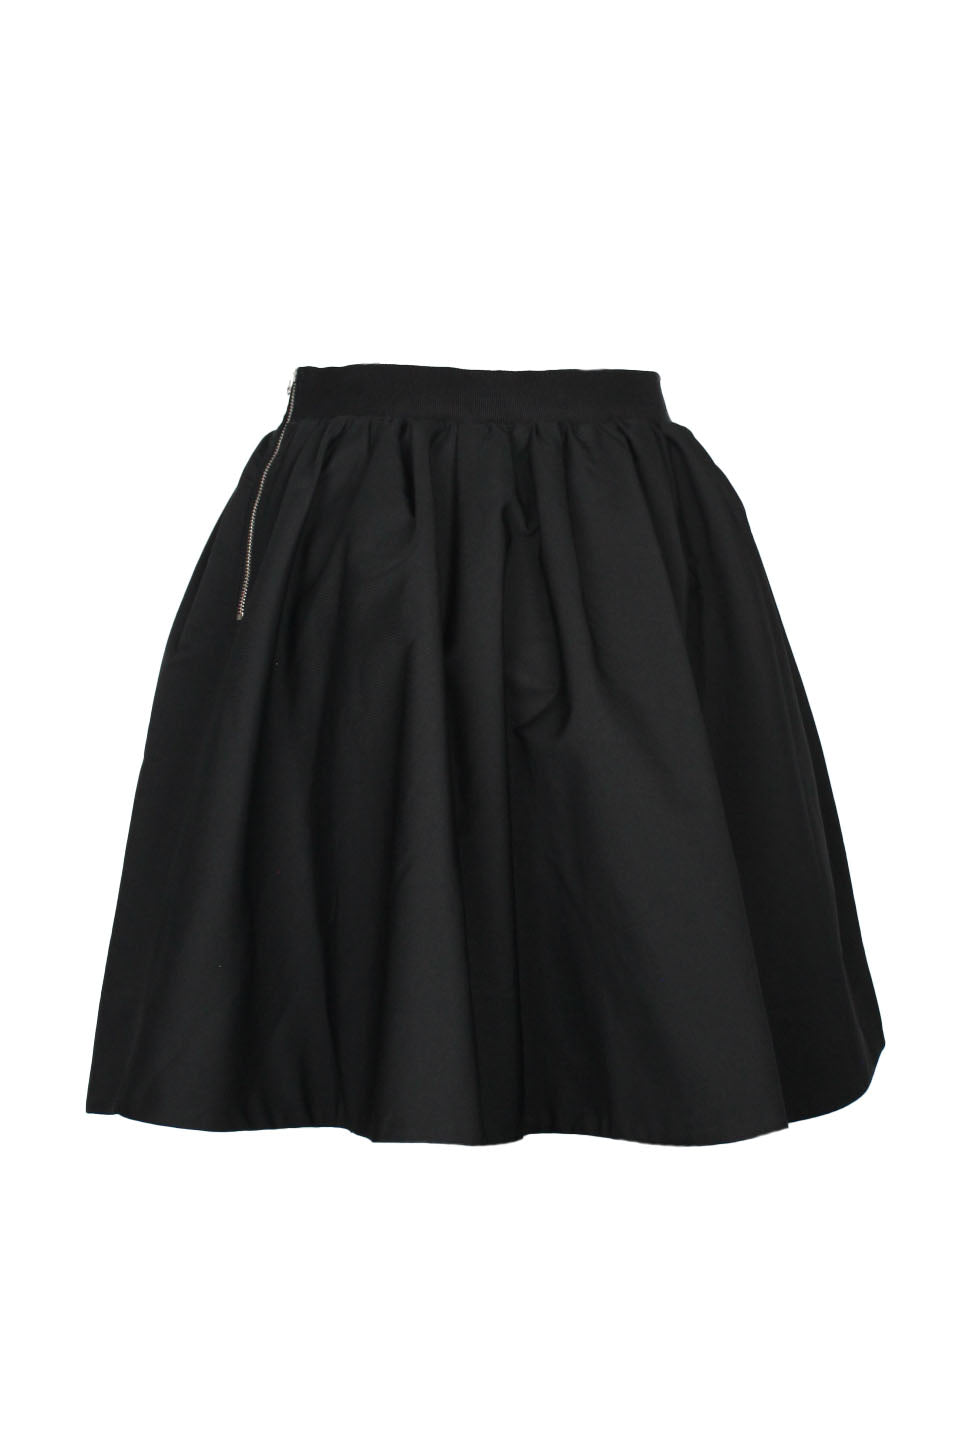 back view of acne studios black mini skirt